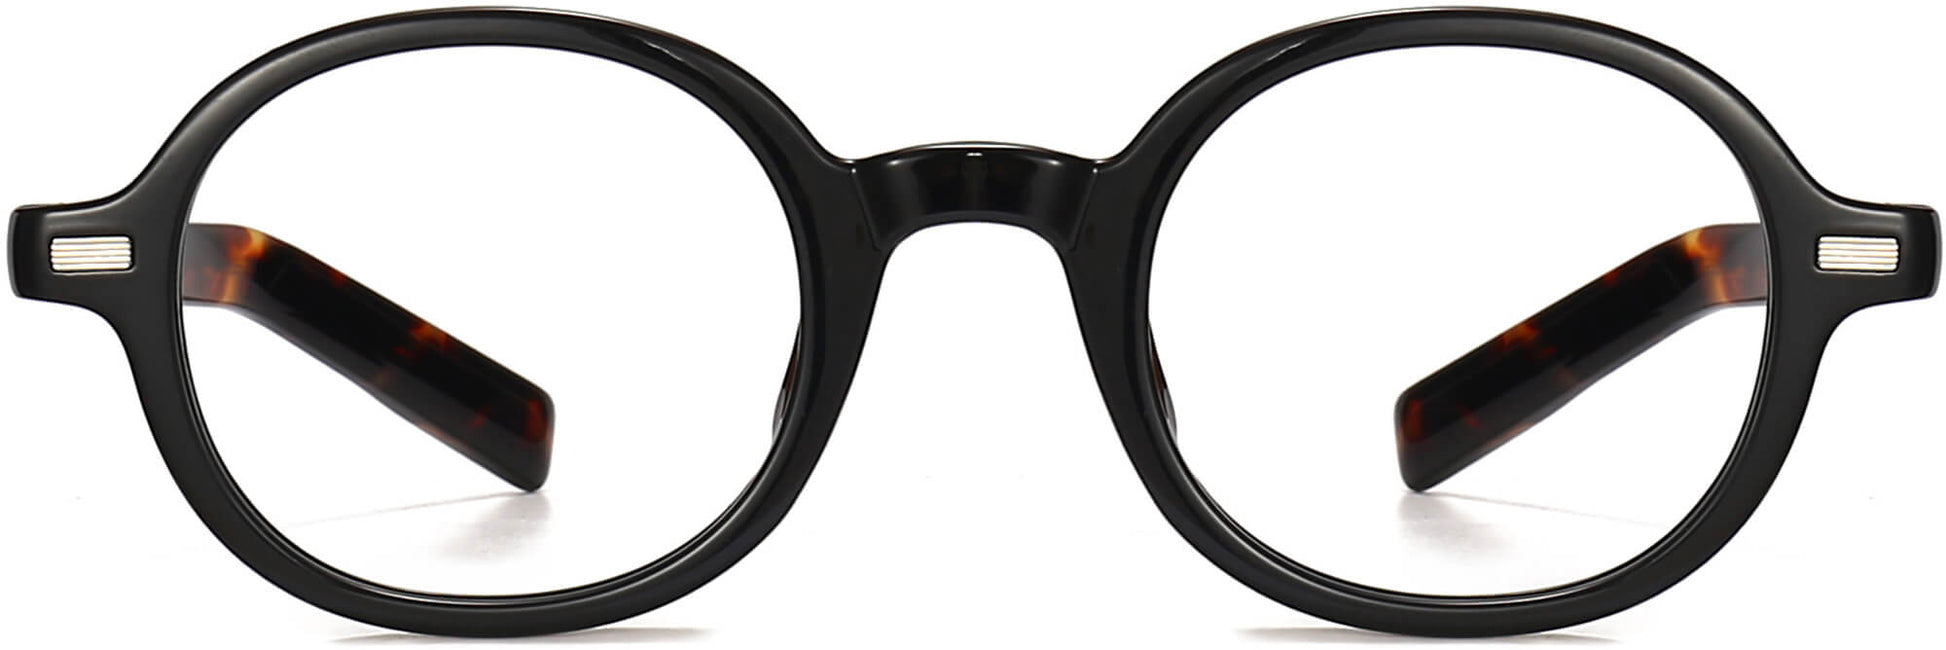 Kashton Round Black Eyeglasses from ANRRI, front view